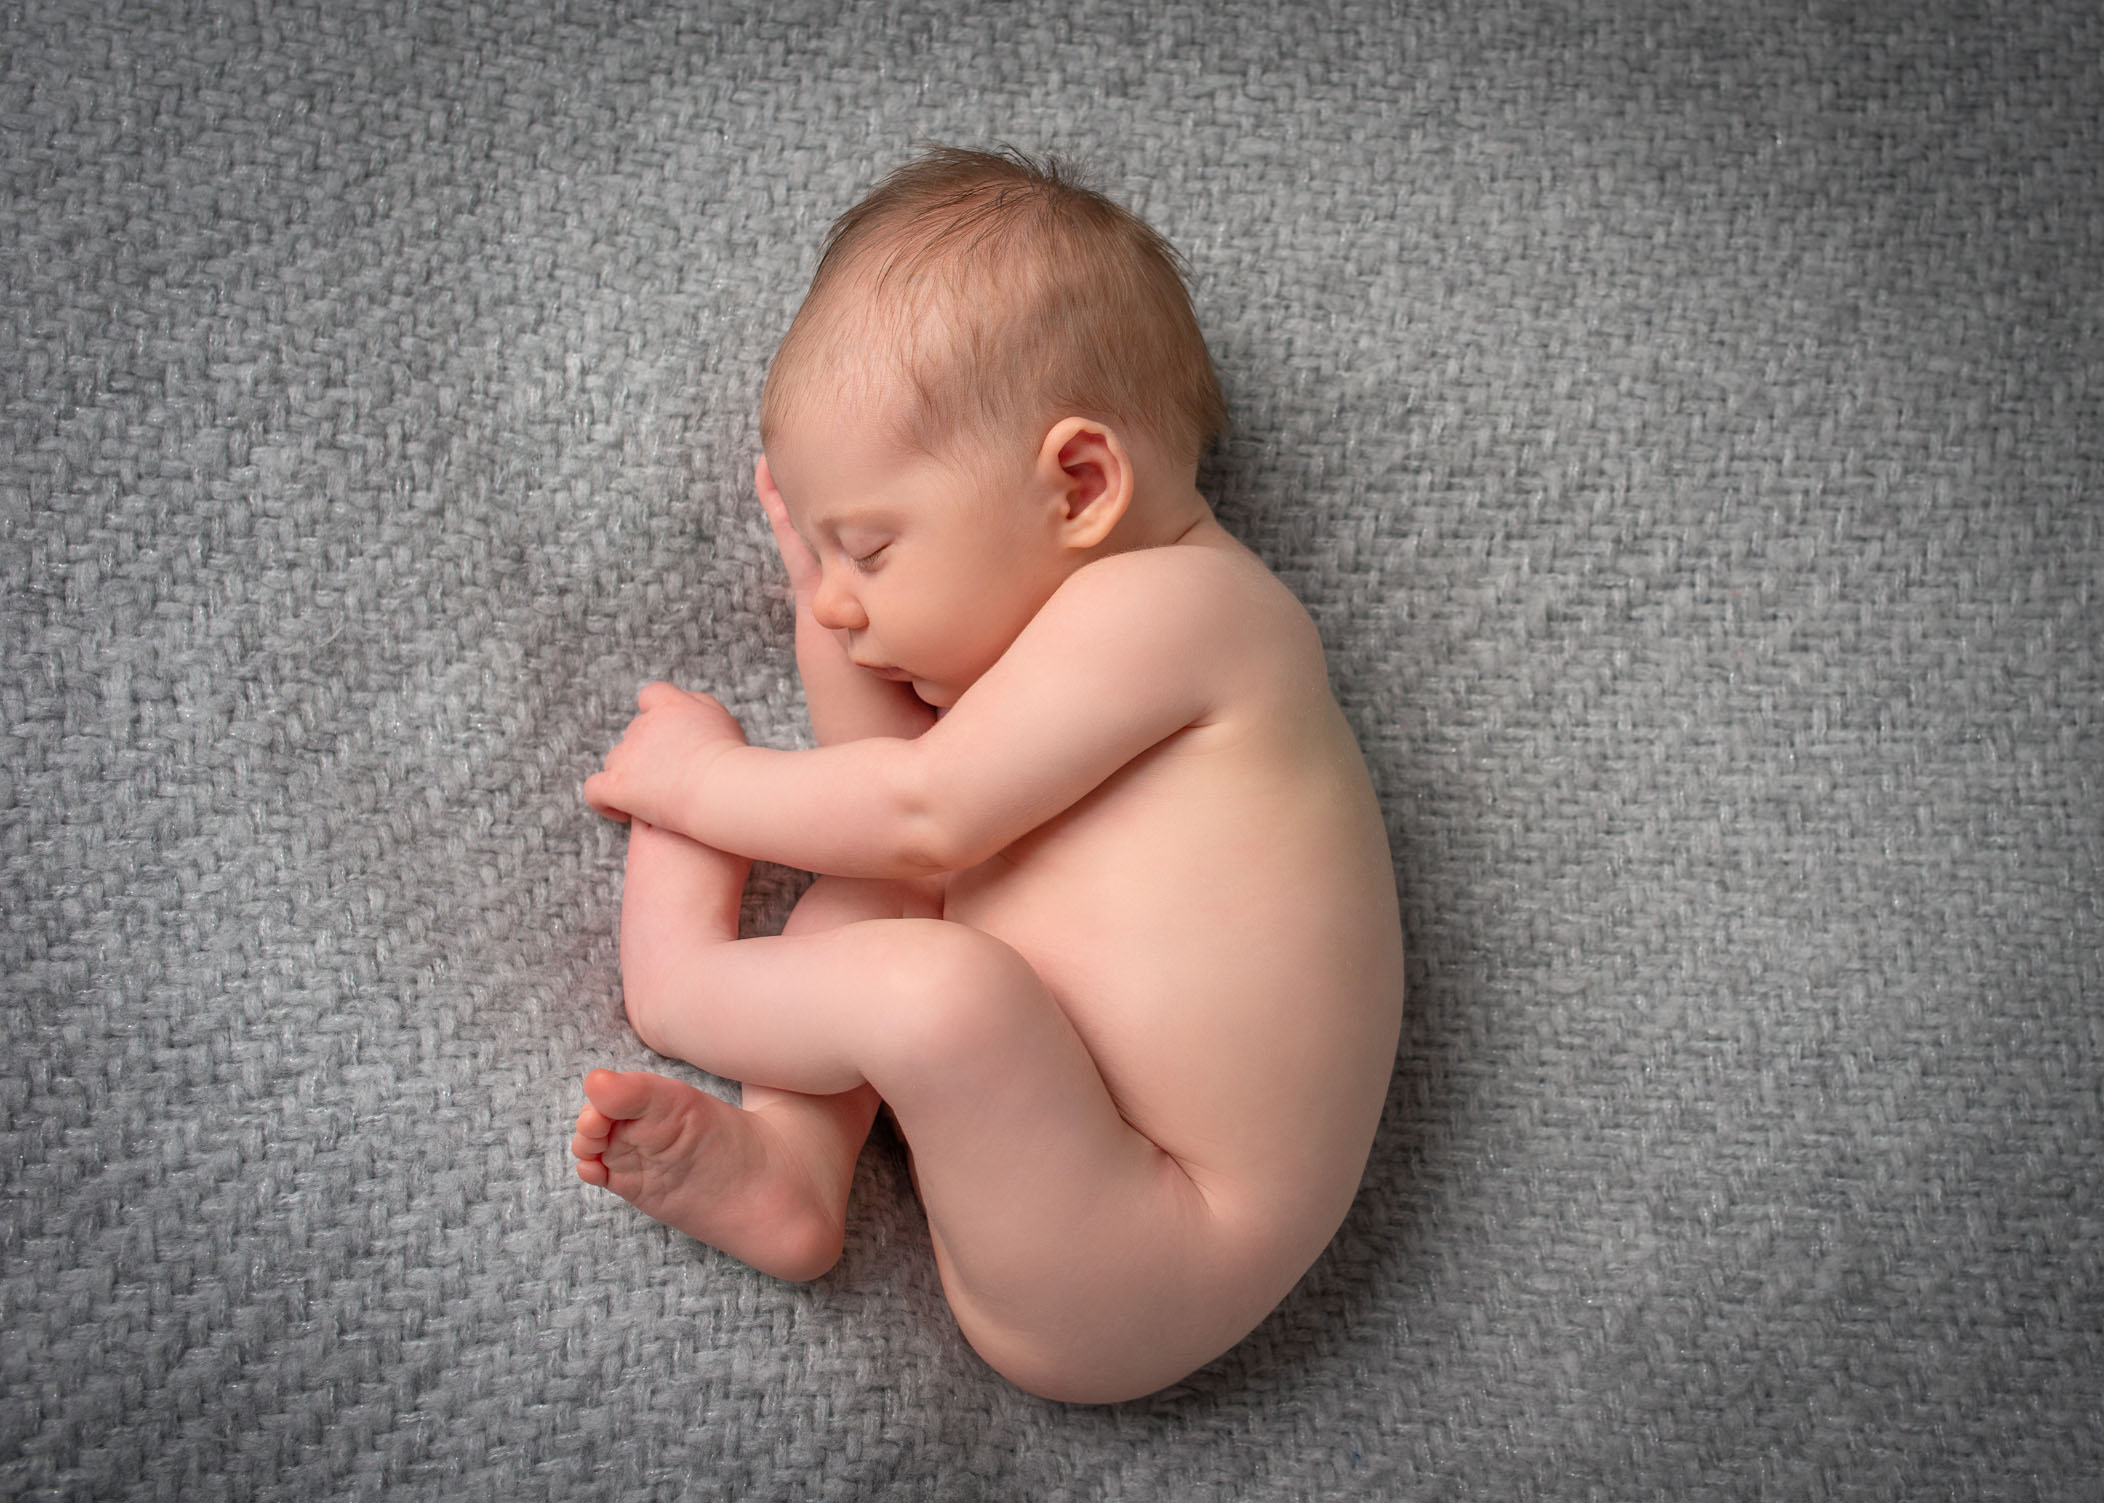 newborn baby girl sleeping on grey blanket on her side in womb like pose